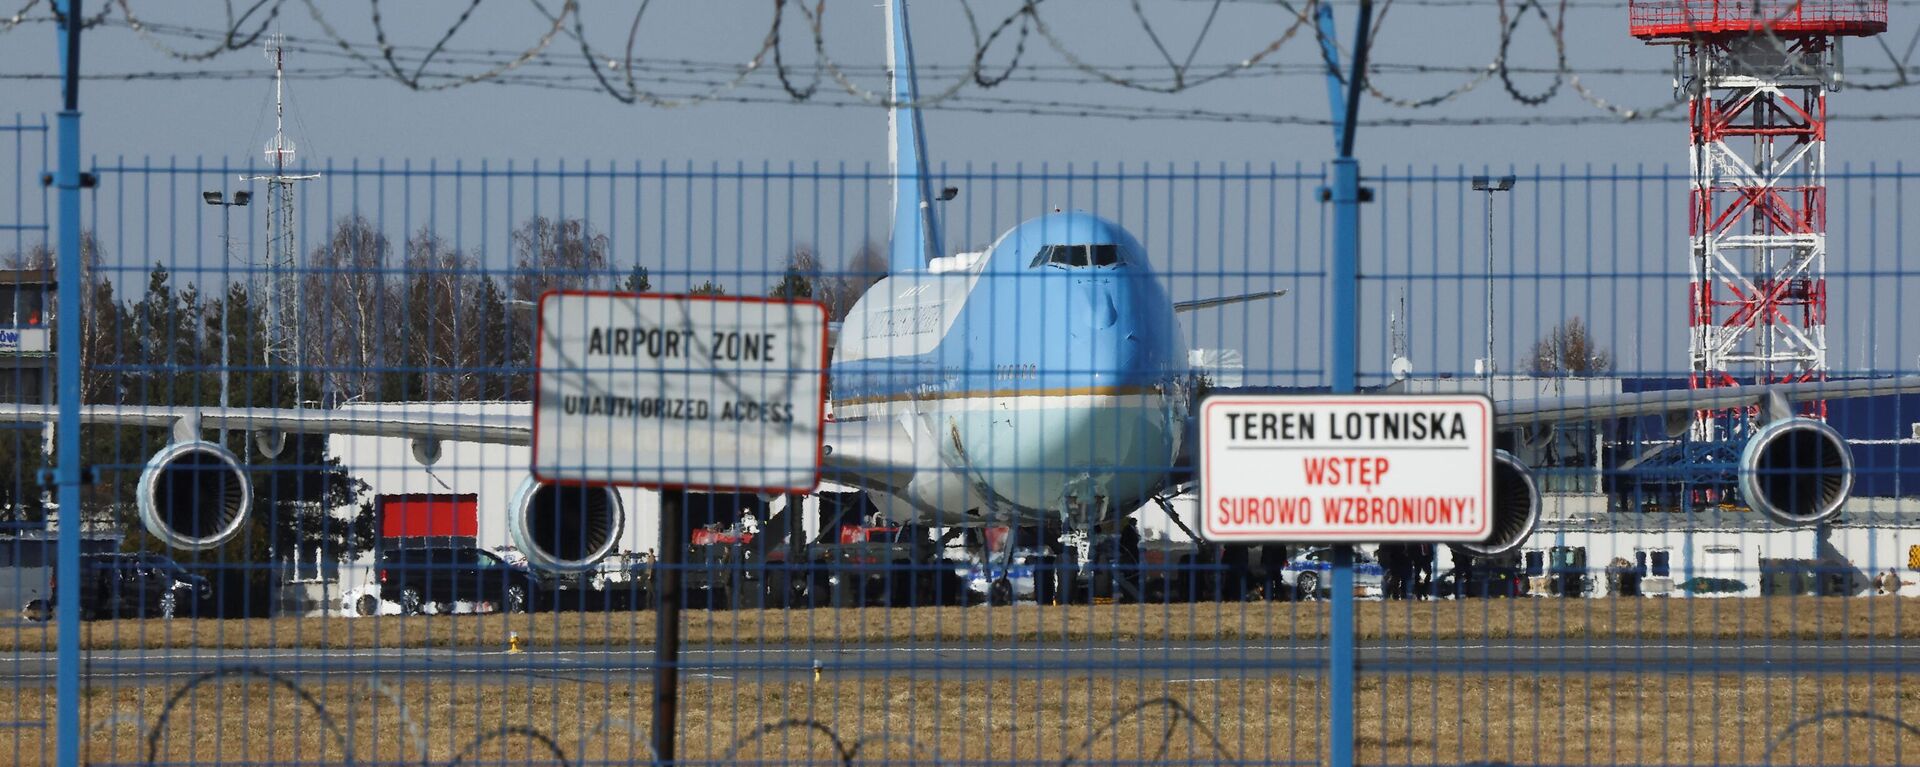 Air Force One lands at Rzeszow-Jasionka Airport as U.S. President Joe Biden arrives to visit Poland, 25 March 2022.  - Sputnik International, 1920, 25.03.2022